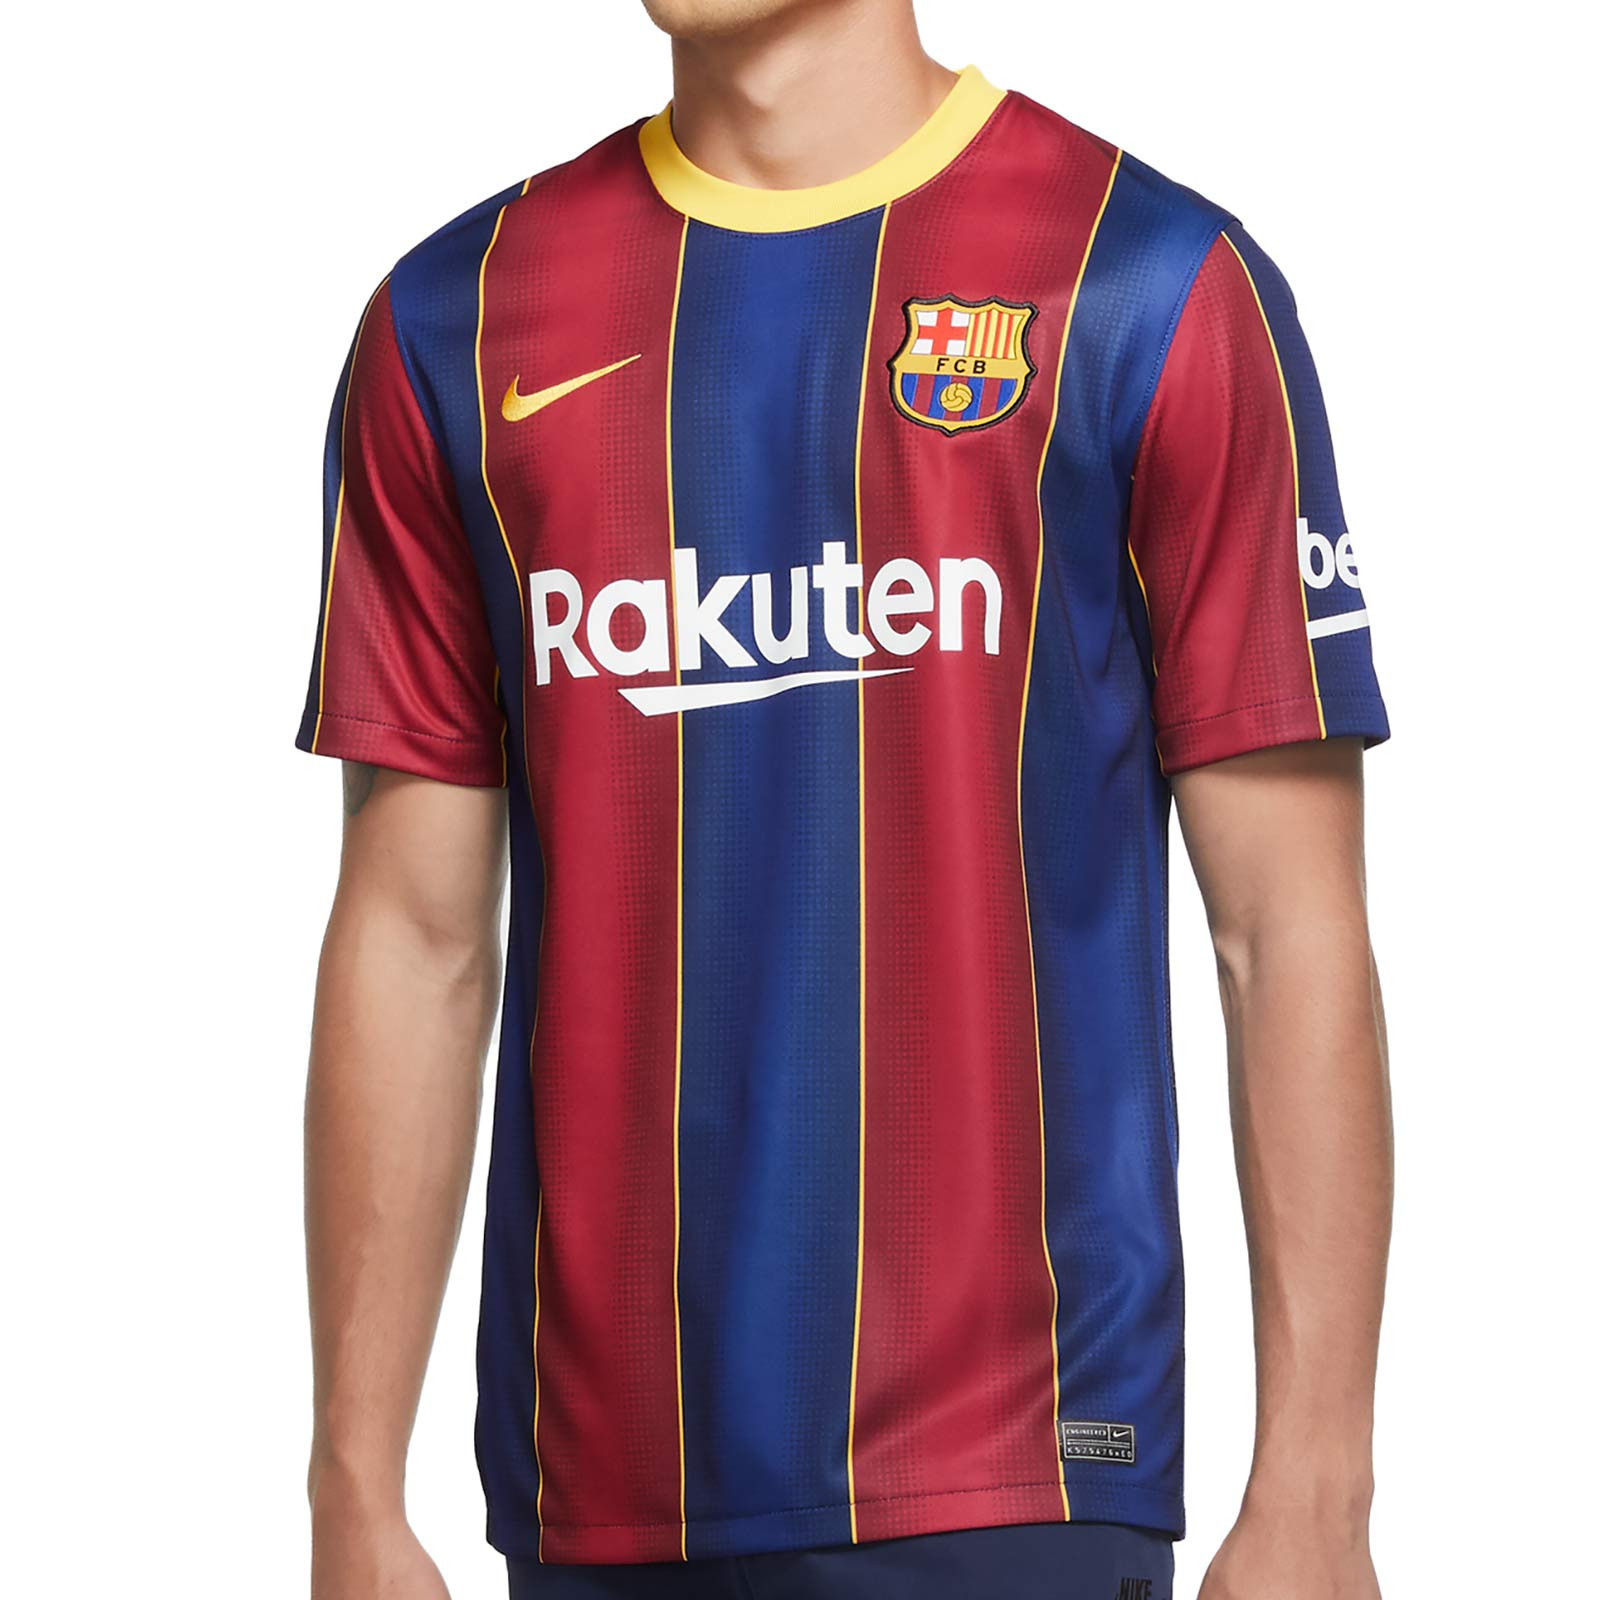 Camiseta Nike De Jong Barcelona 2020 2021 Stadium futbolmania